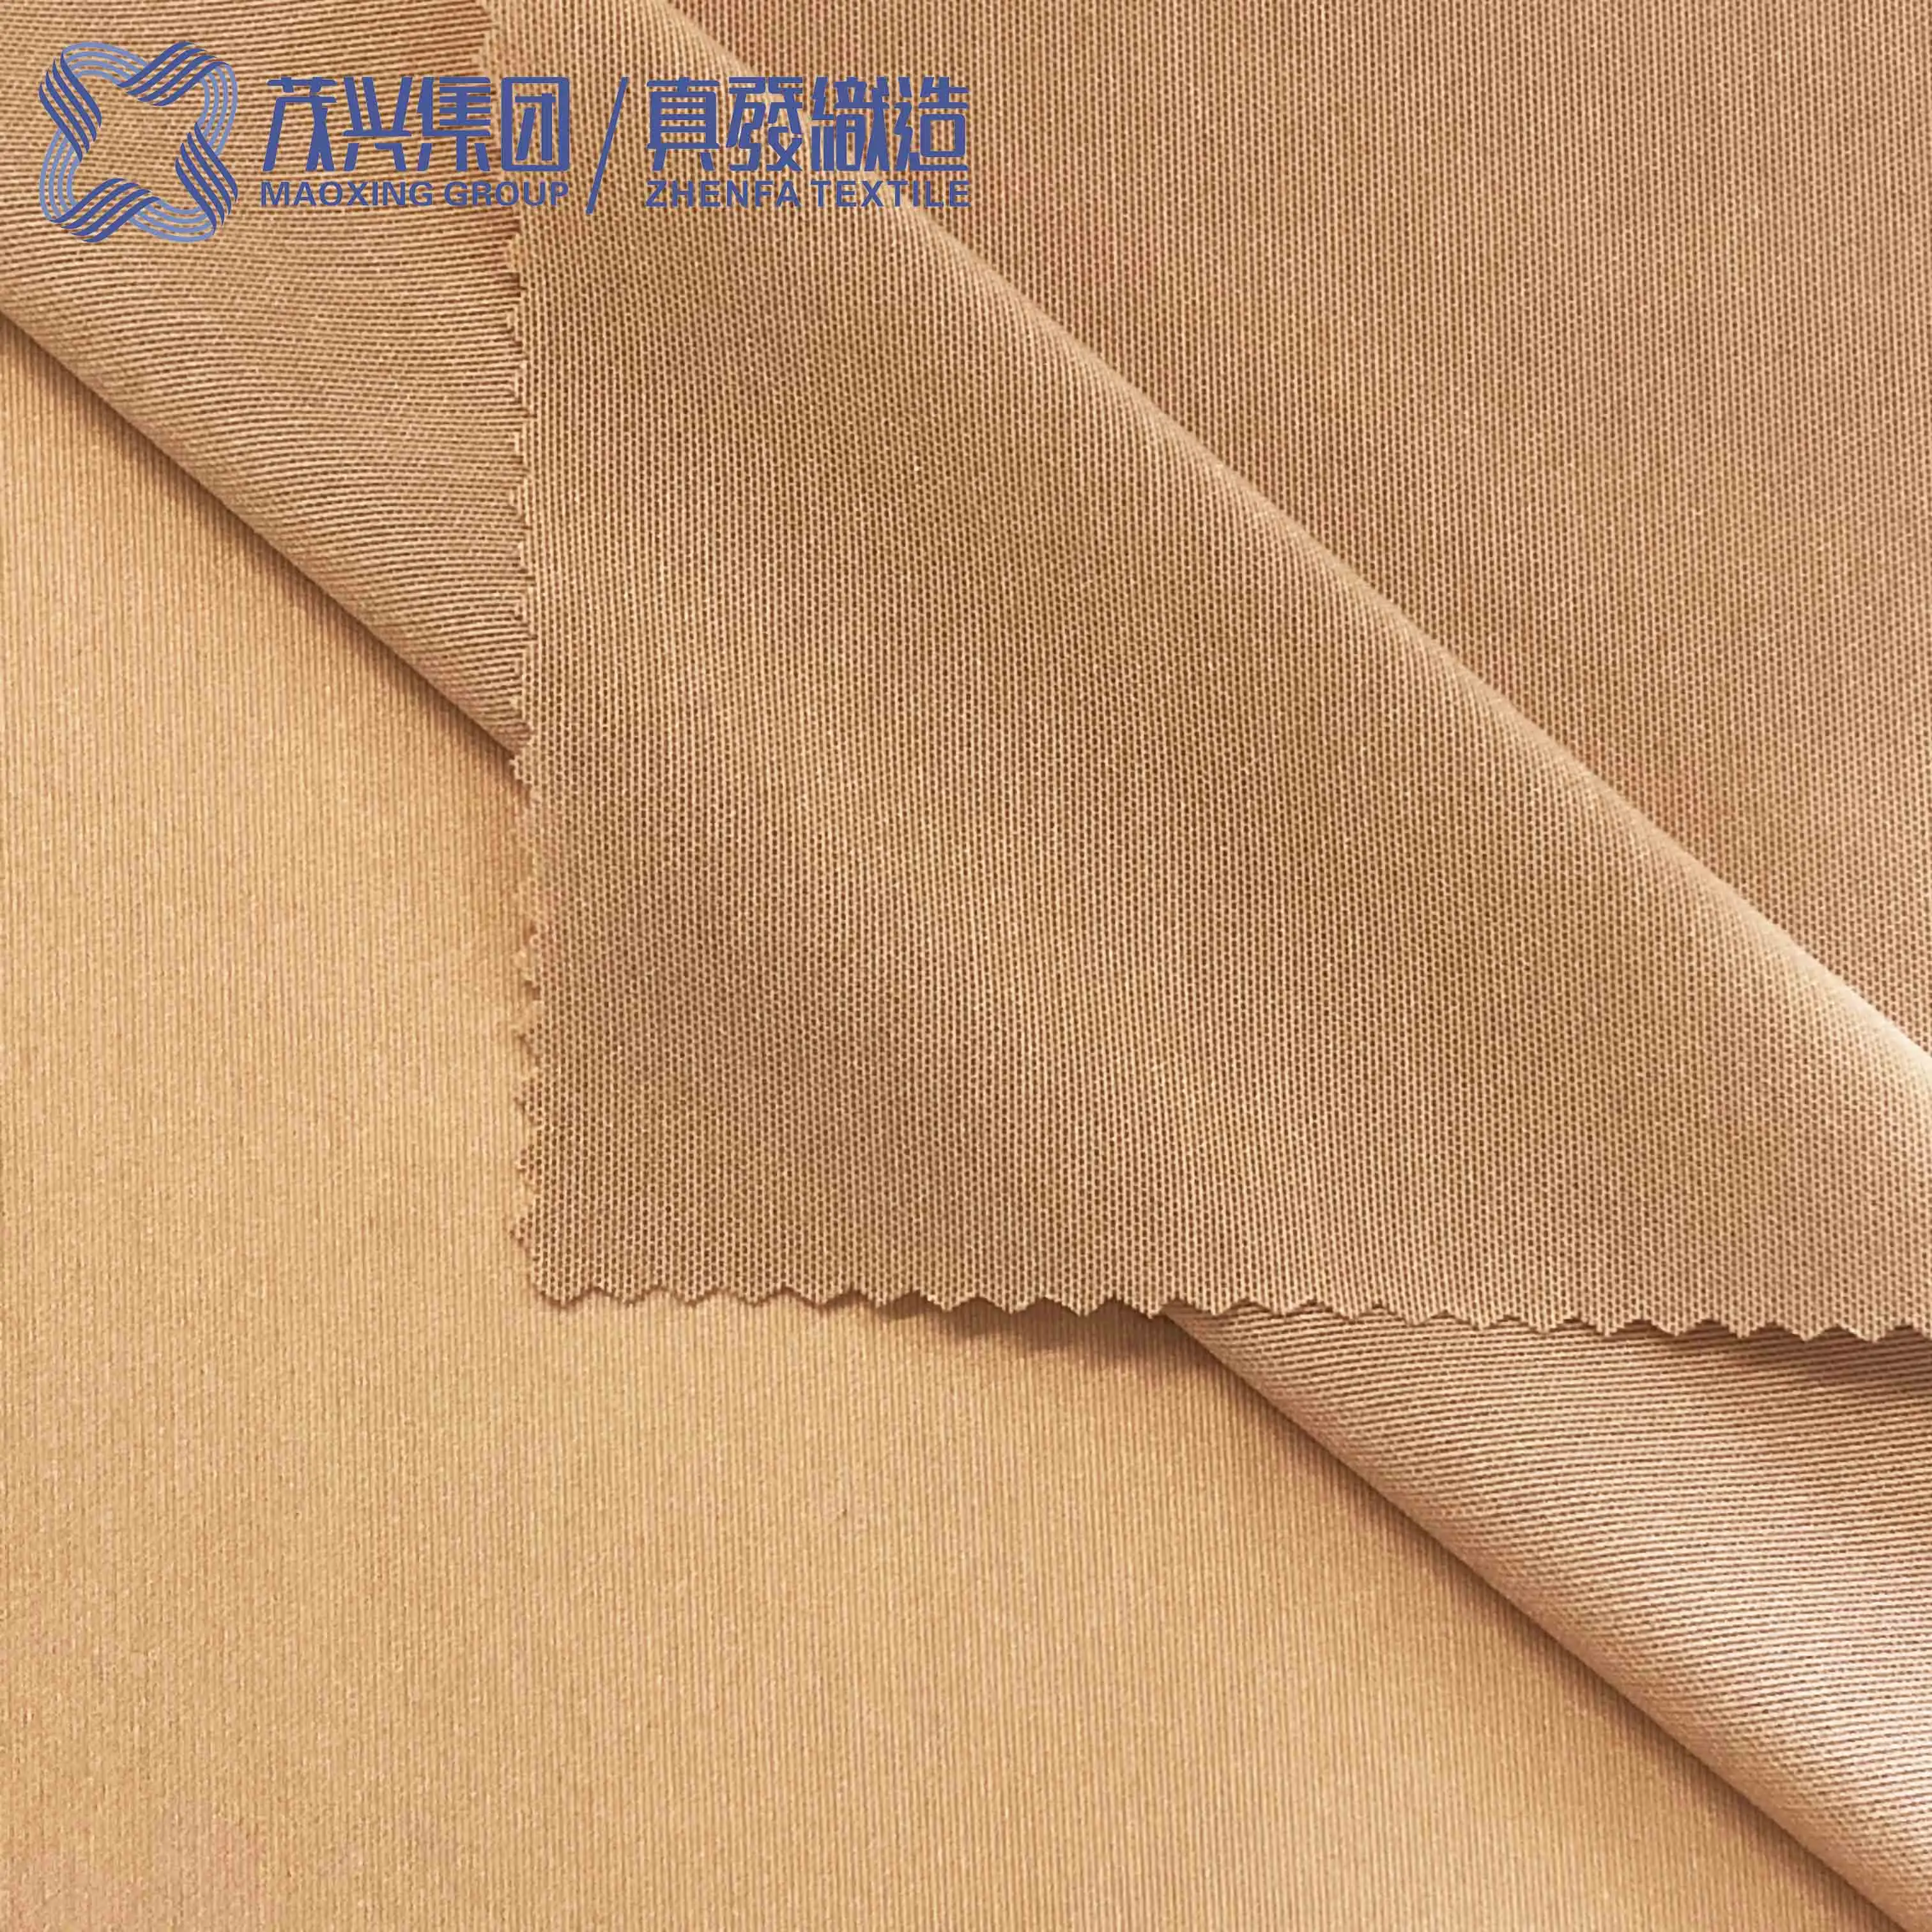 Metallic Mesh Spandex Hight Stretch Nylon Spandex Fabric High Stretch Powernet Nylon Mesh Fabric for Shapewear